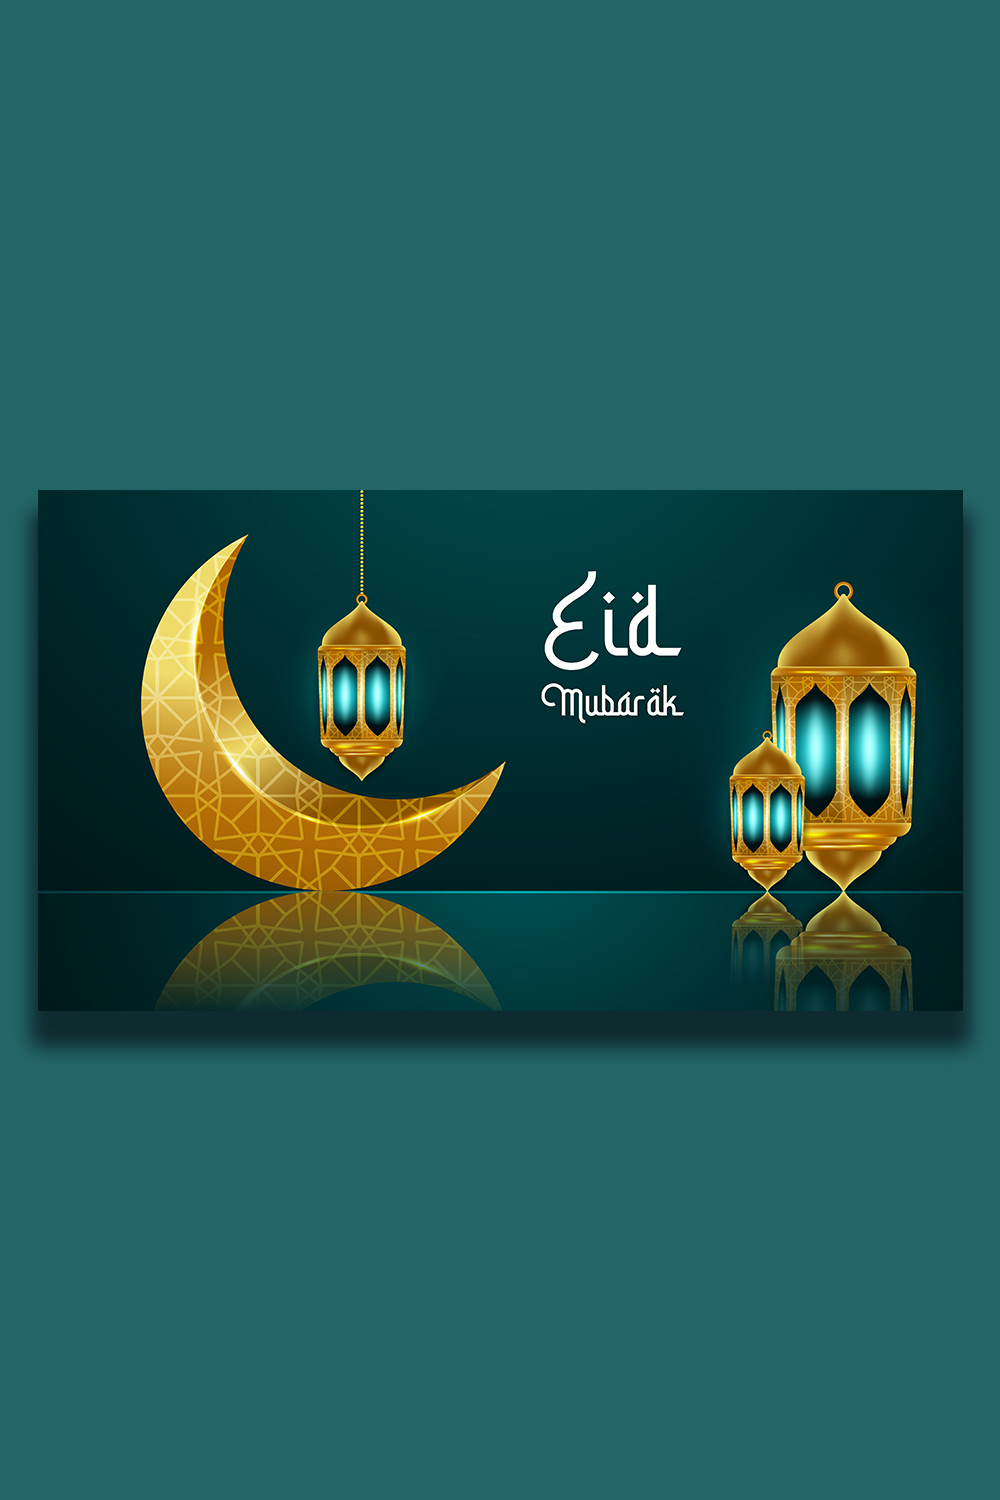 3D Eid Mubarak Greetings Background pinterest preview image.